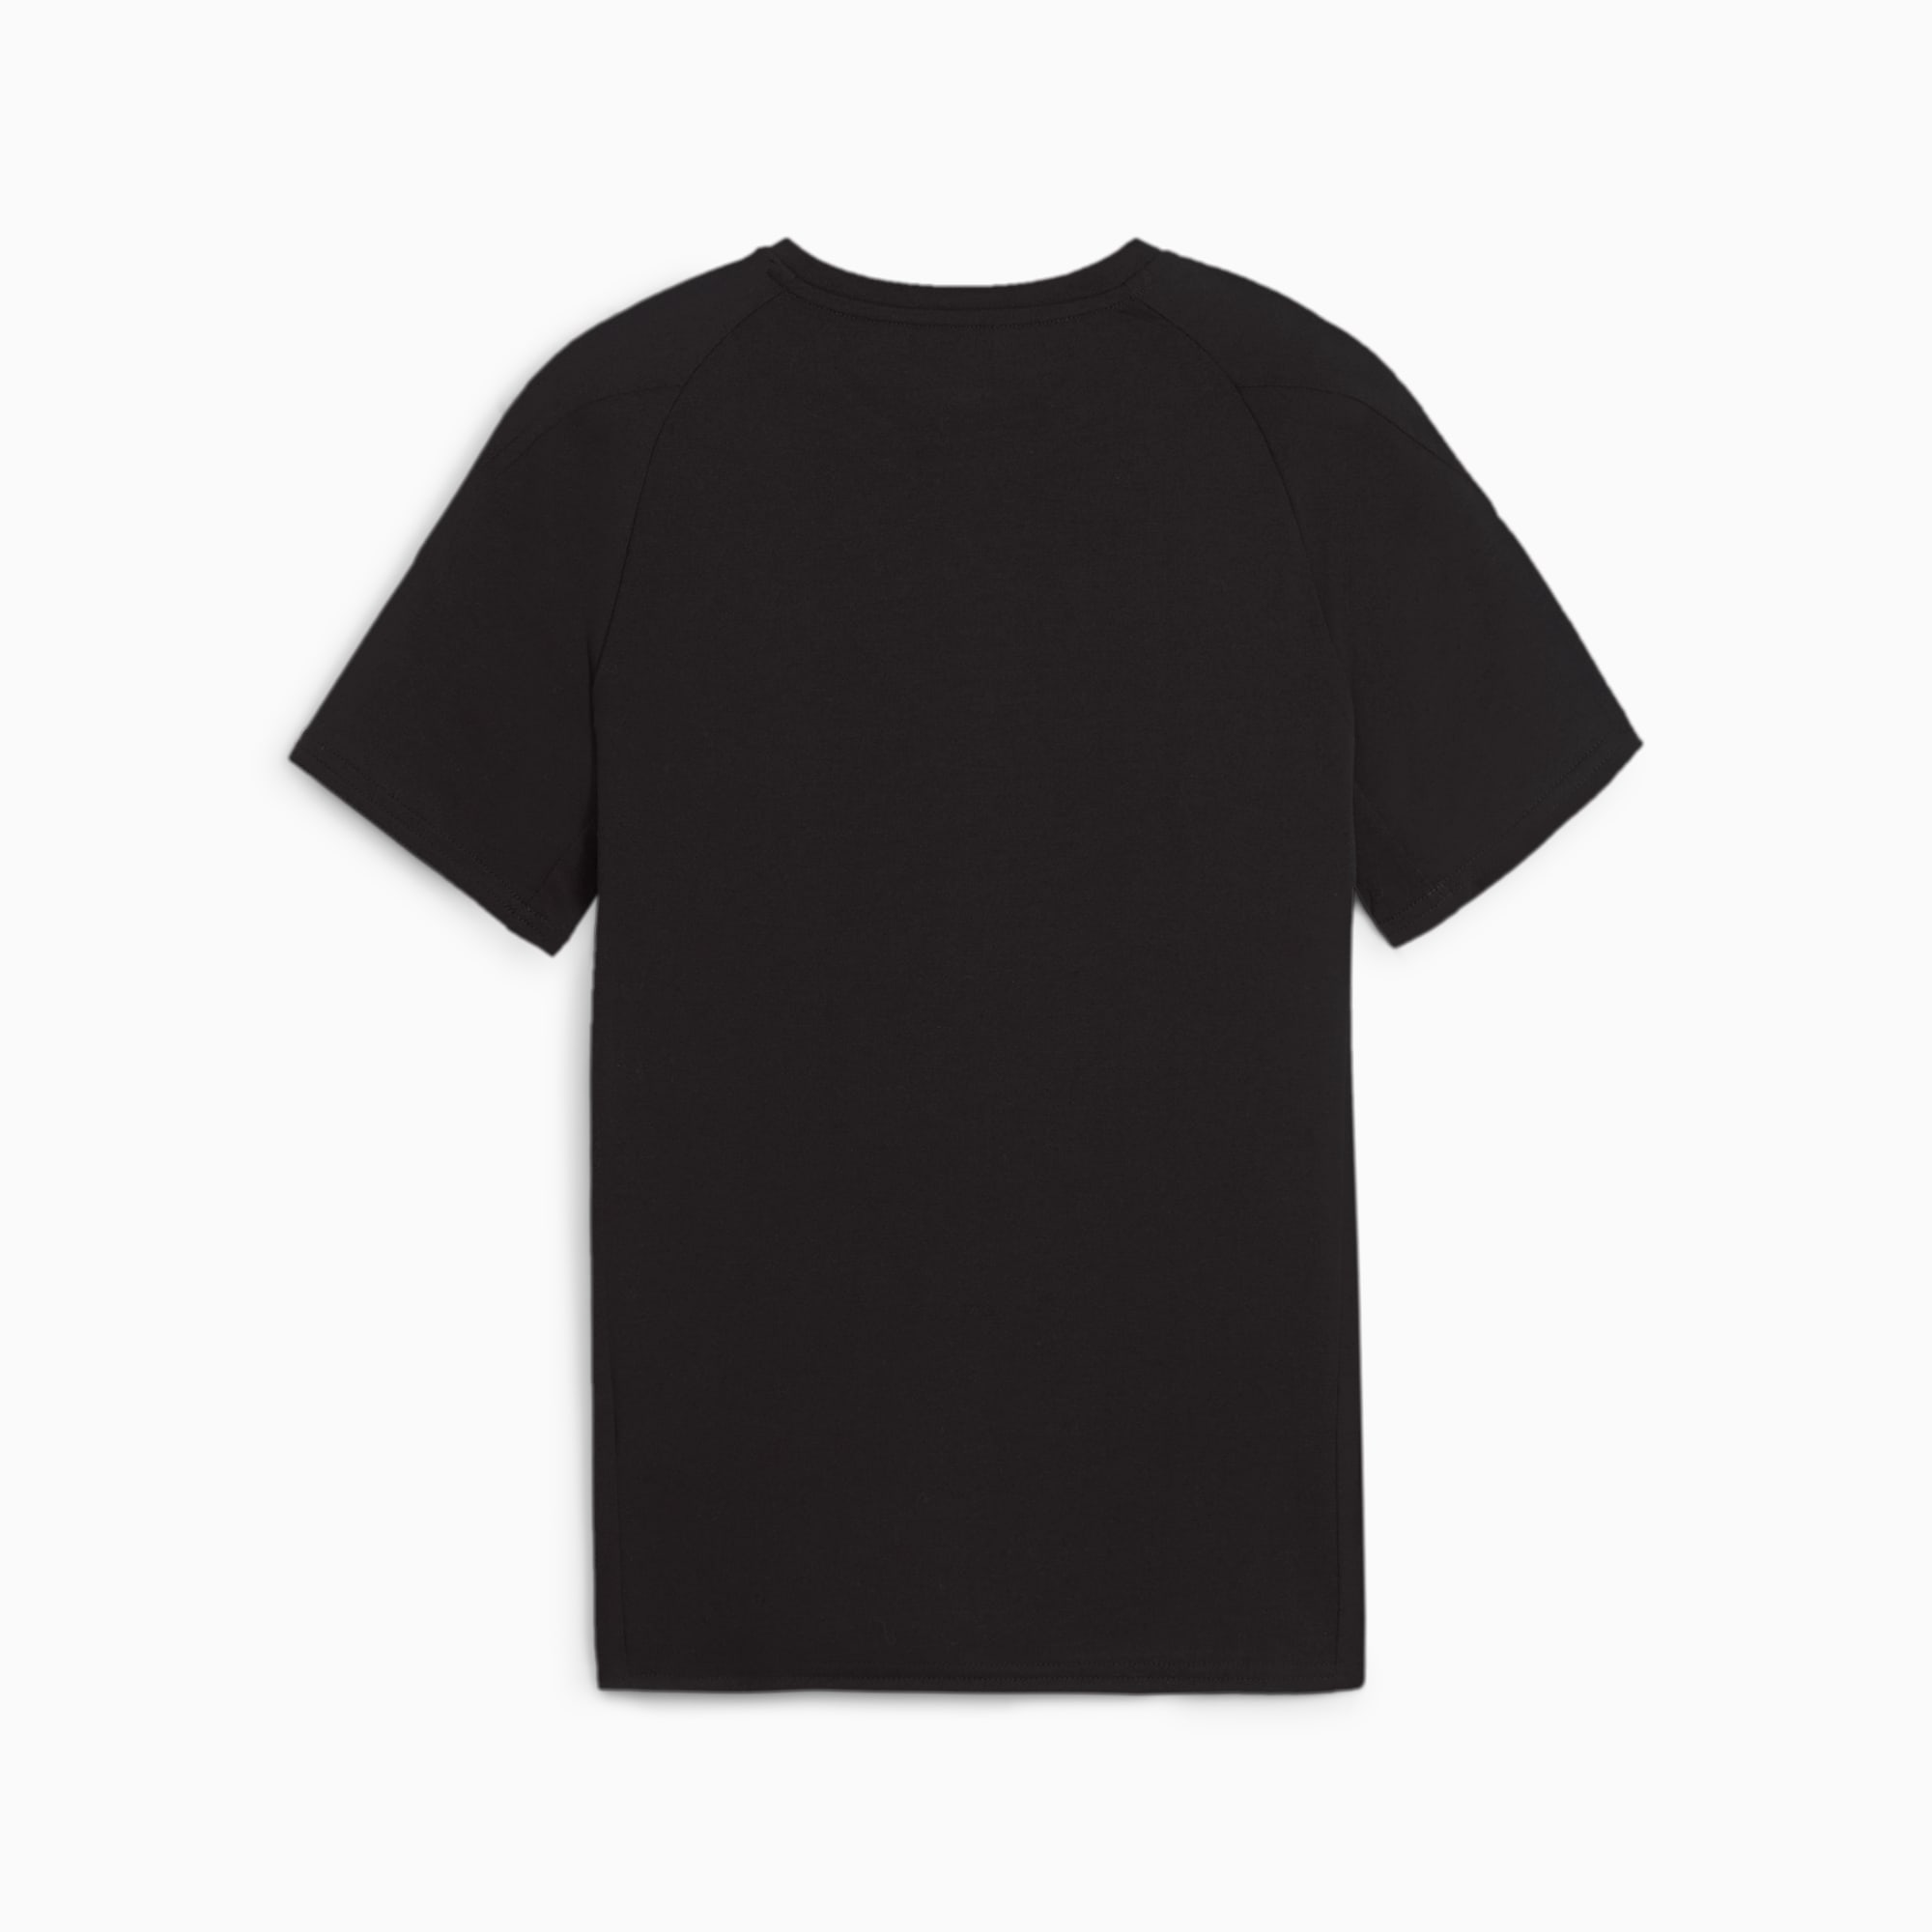 PUMA Evostripe Youth T-Shirt, Black, Size 116, Clothing